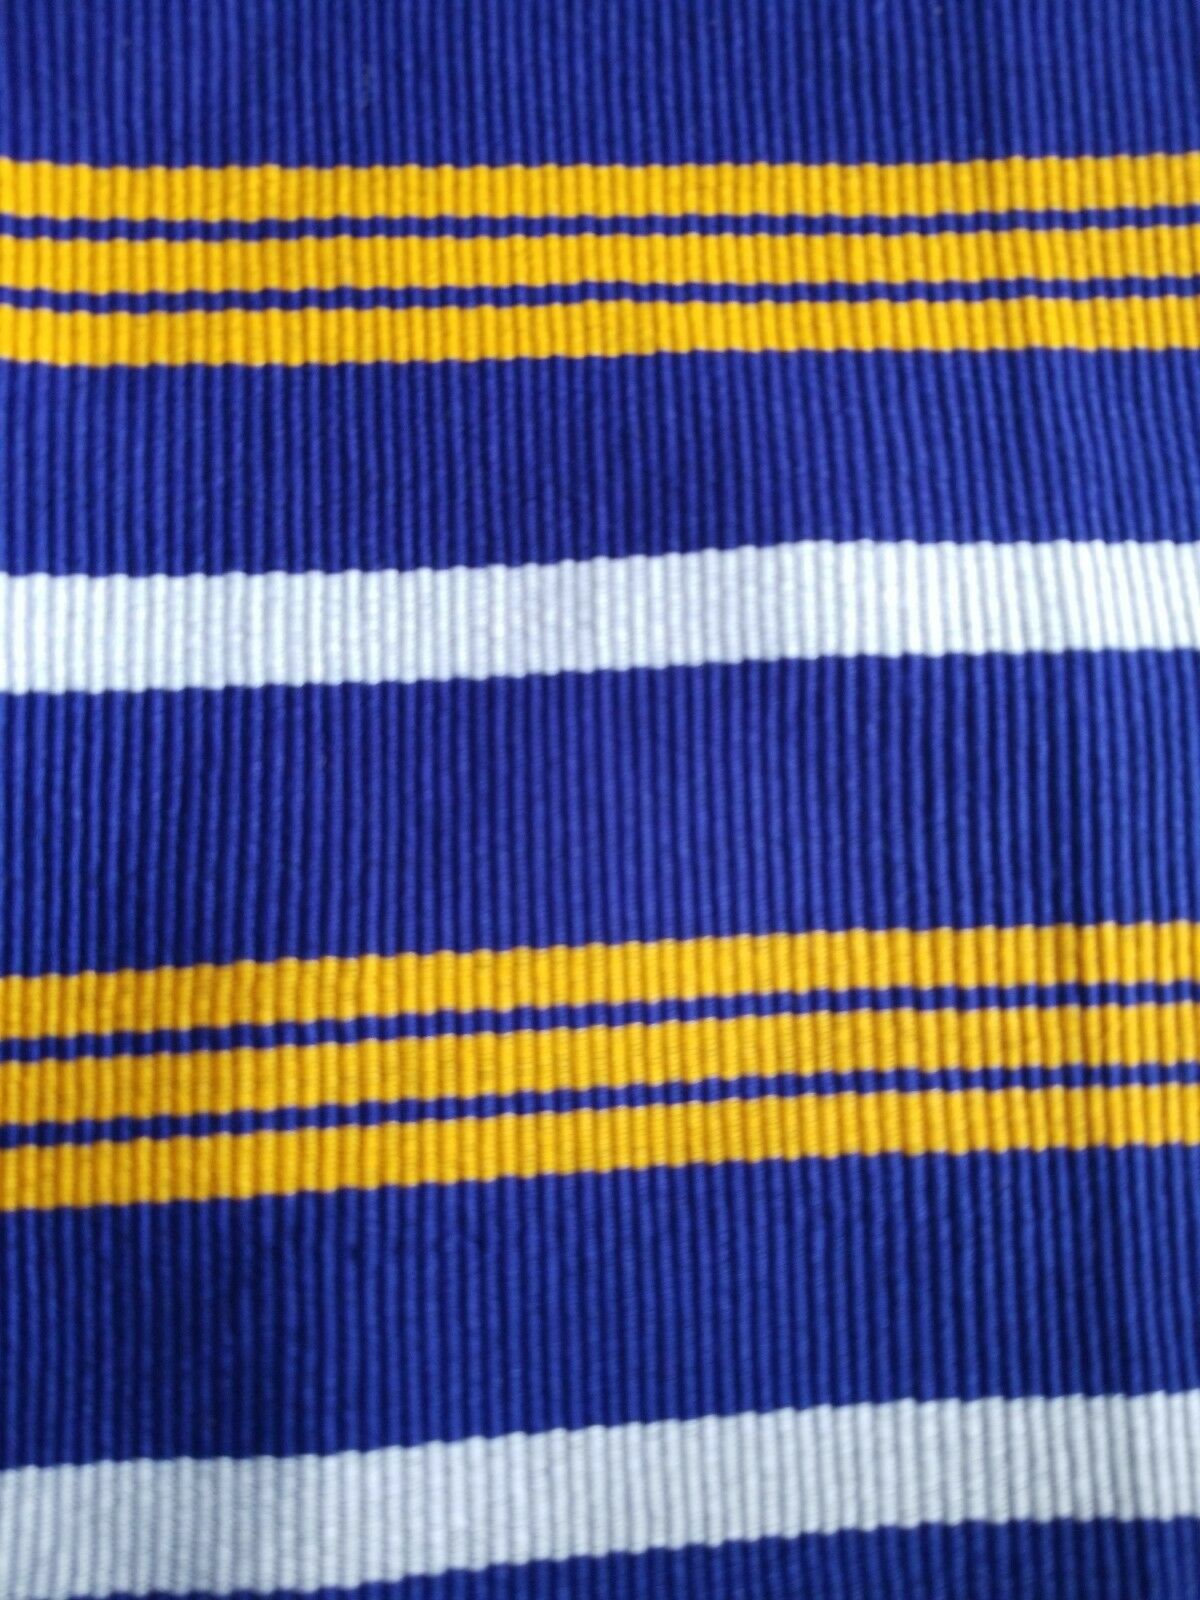 Faso Da Fani Fabric From Boukina Faso~Blue Yellow &white 52"×75"